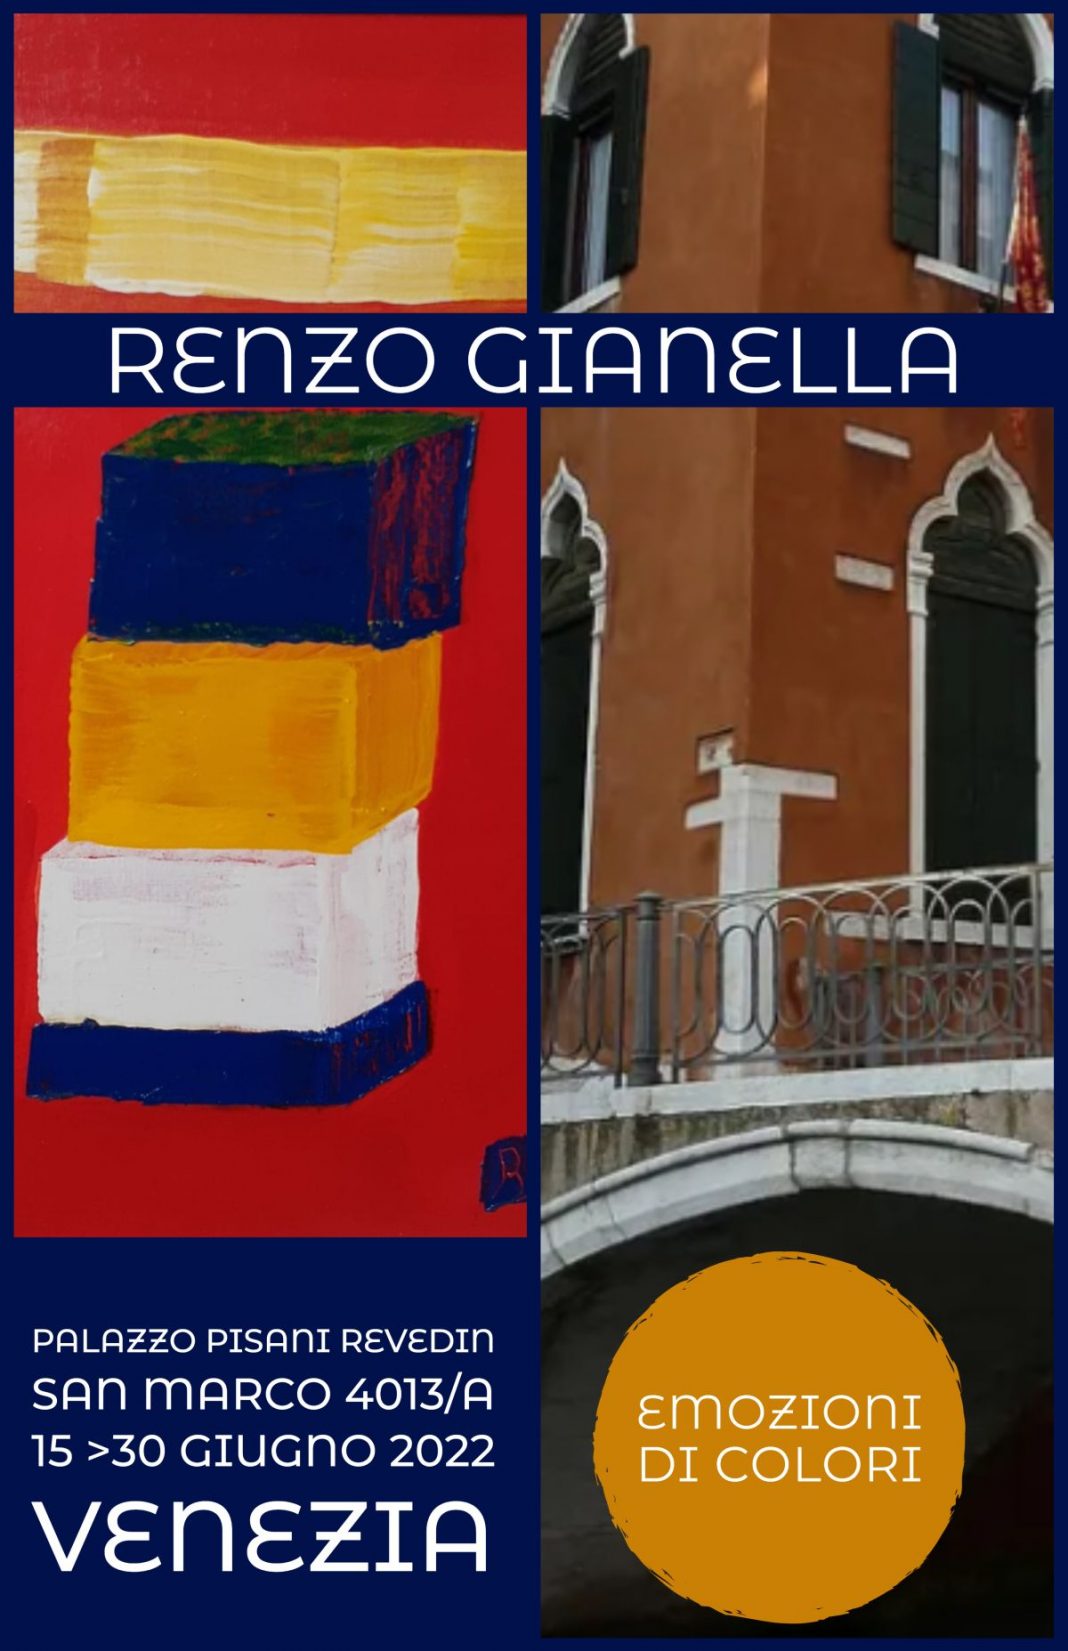 Renzo Gianella – Emozioni di colorihttps://www.exibart.com/repository/media/formidable/11/img/826/REVEDIN-GIANELLA-jjj-1068x1651.jpg